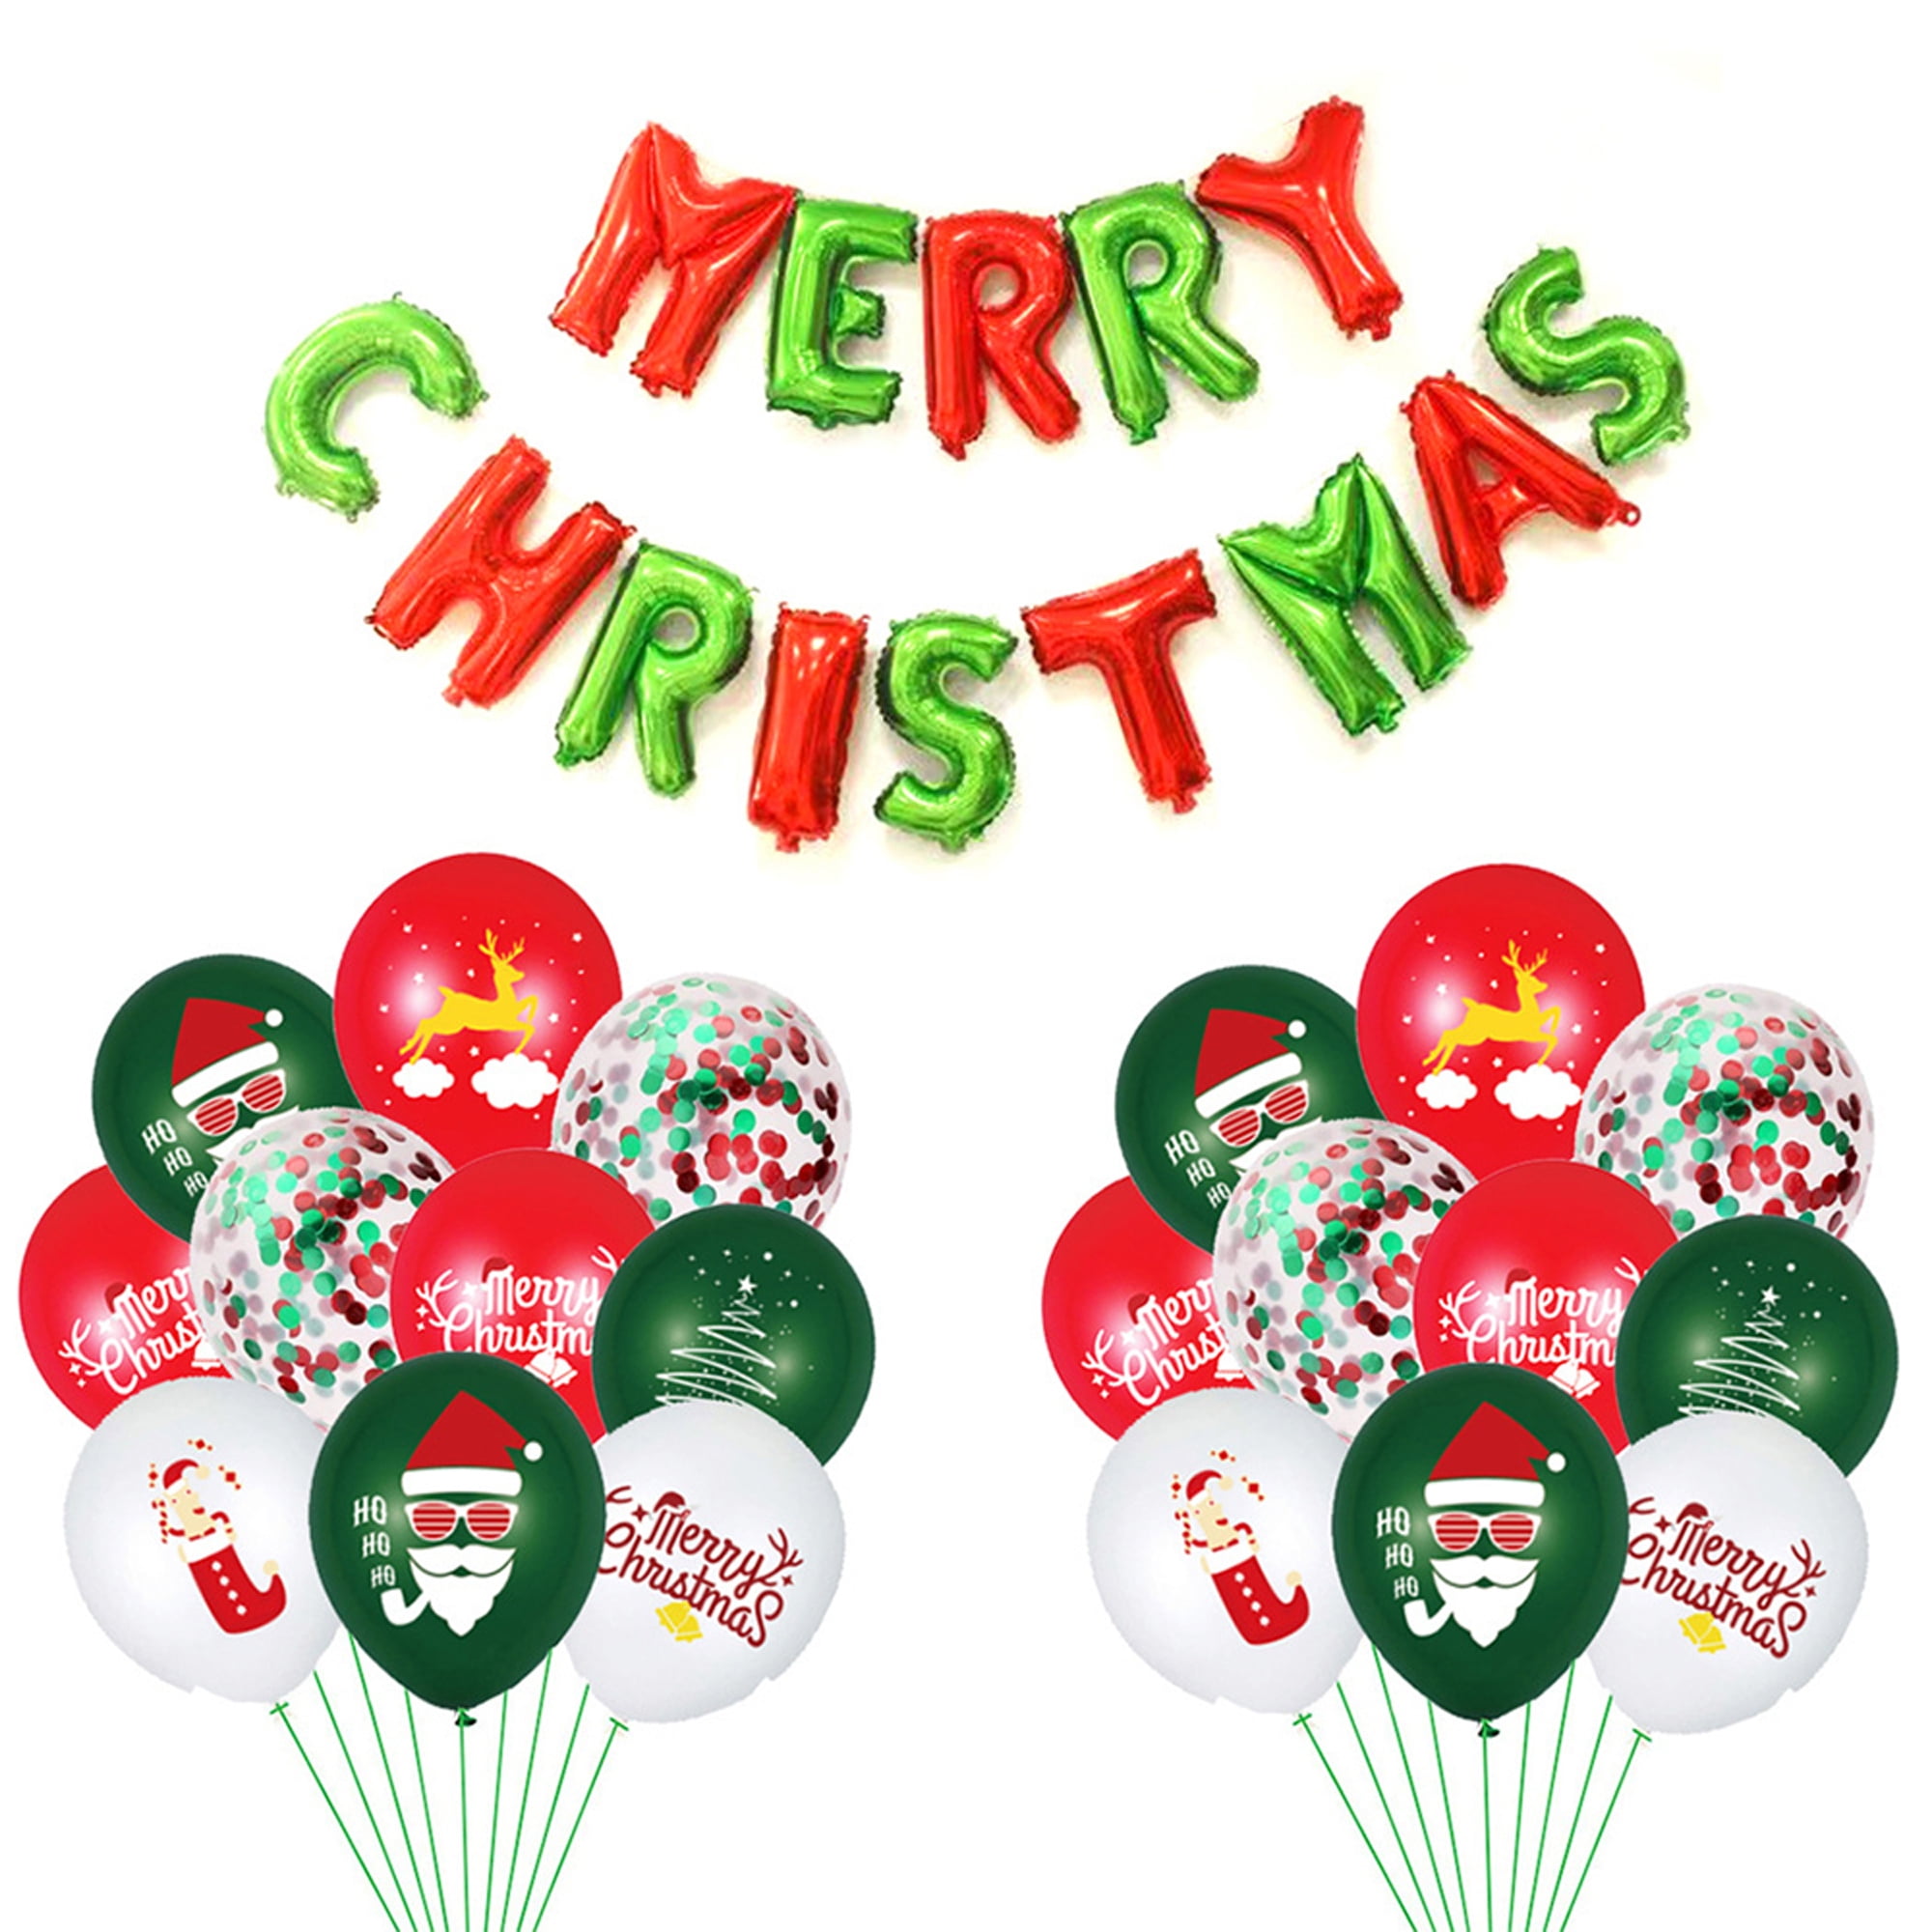 Details about   Merry Christmas Letters Foil Balloon Set Party Festival Decoration Silver